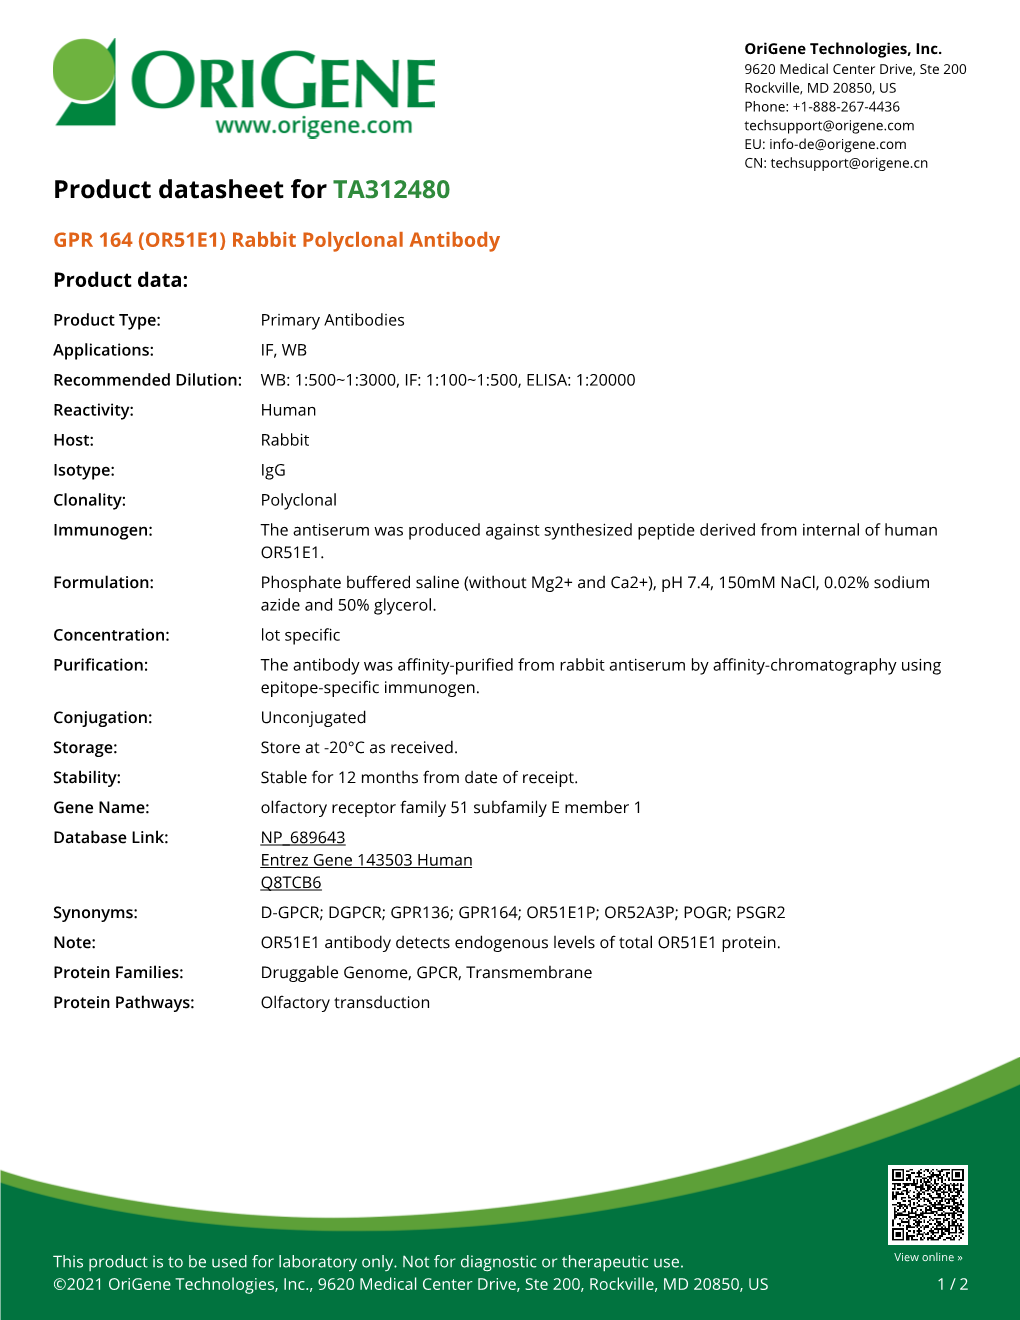 GPR 164 (OR51E1) Rabbit Polyclonal Antibody – TA312480 | Origene